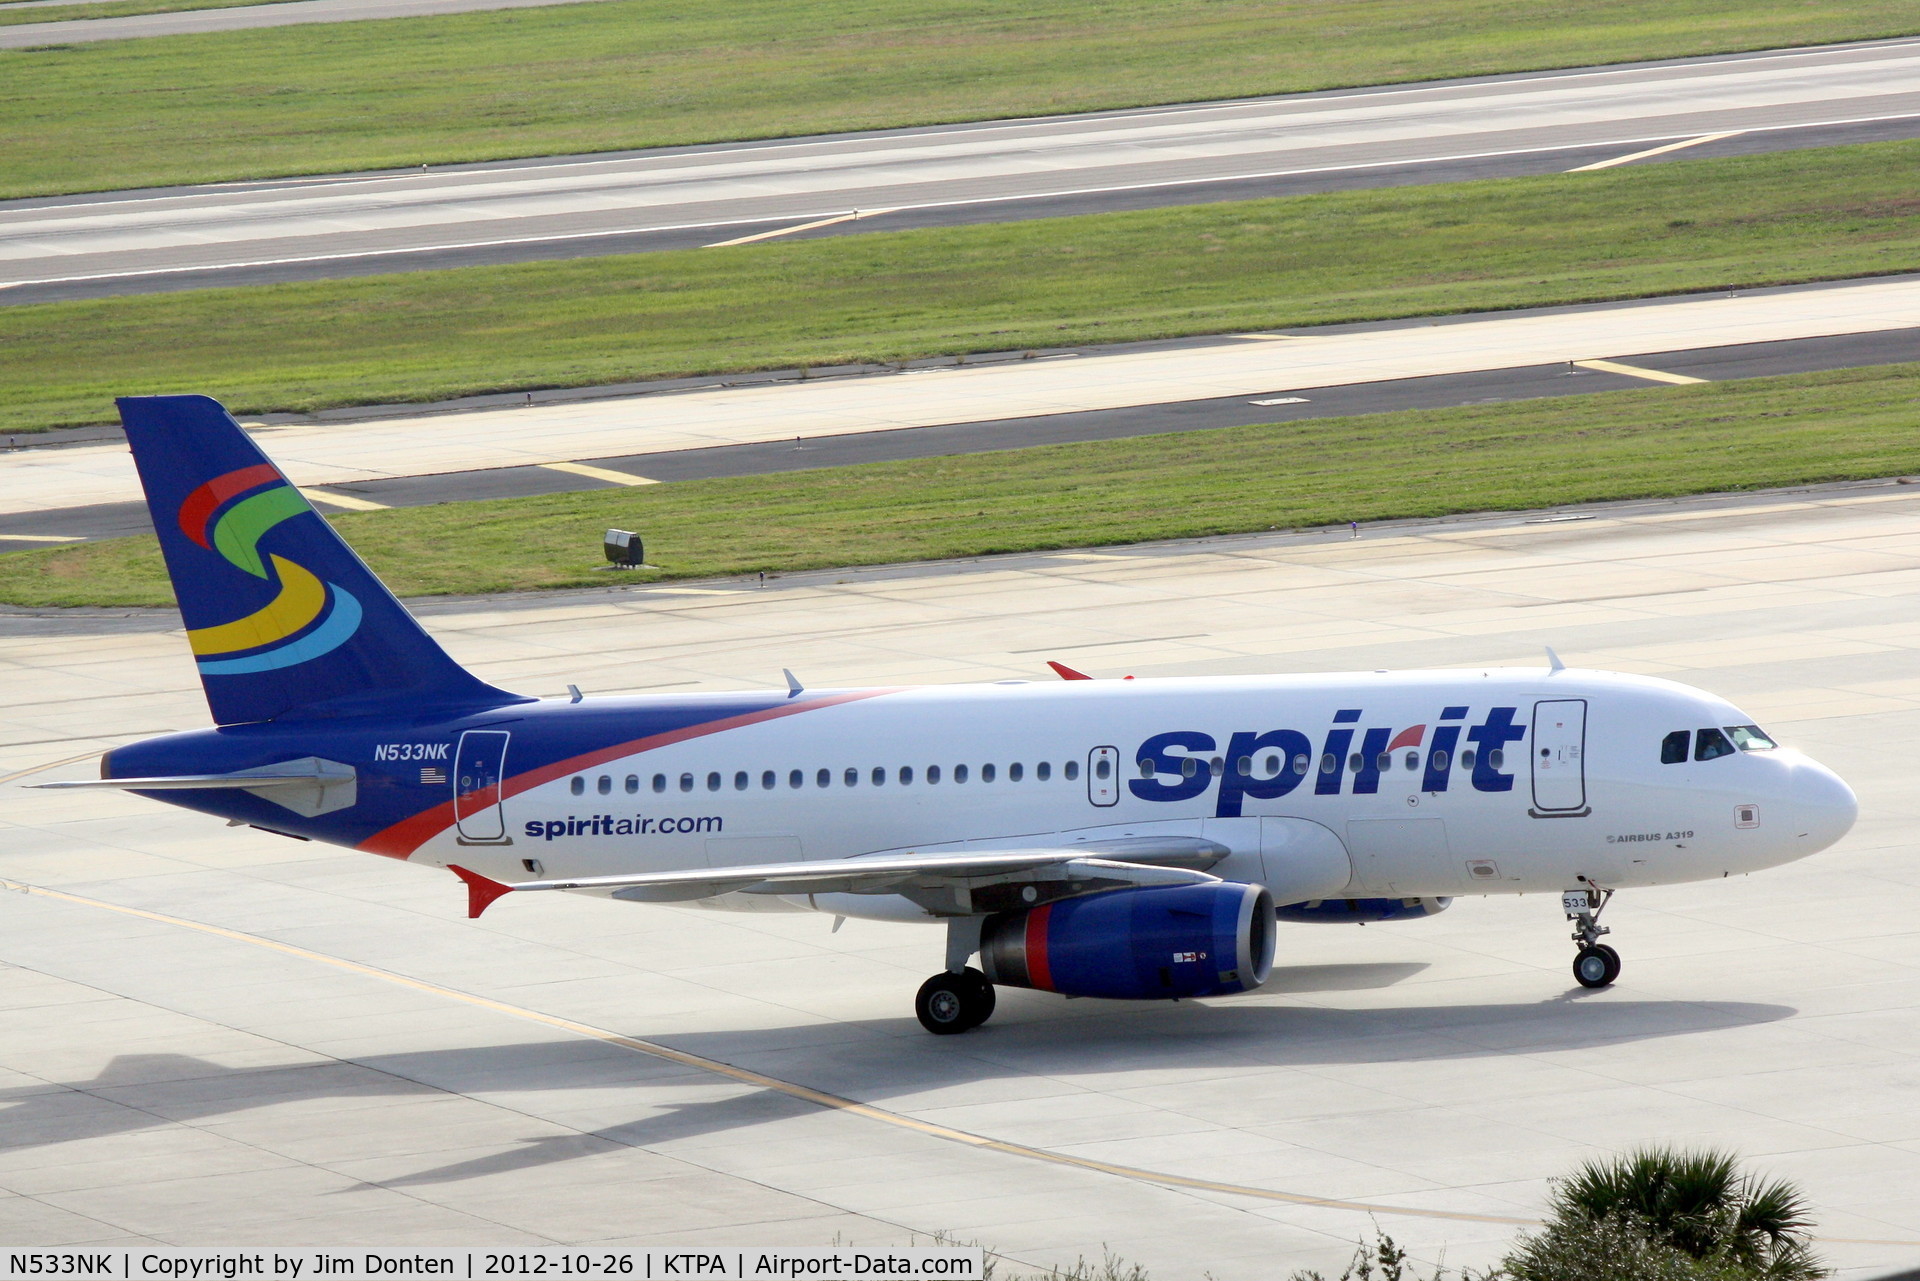 N533NK, 2008 Airbus A319-132 C/N 3393, Spirit Flight 812 (N533NK) arrives at Tampa International Airport following a flight from Dallas/Fort Worth International Airport